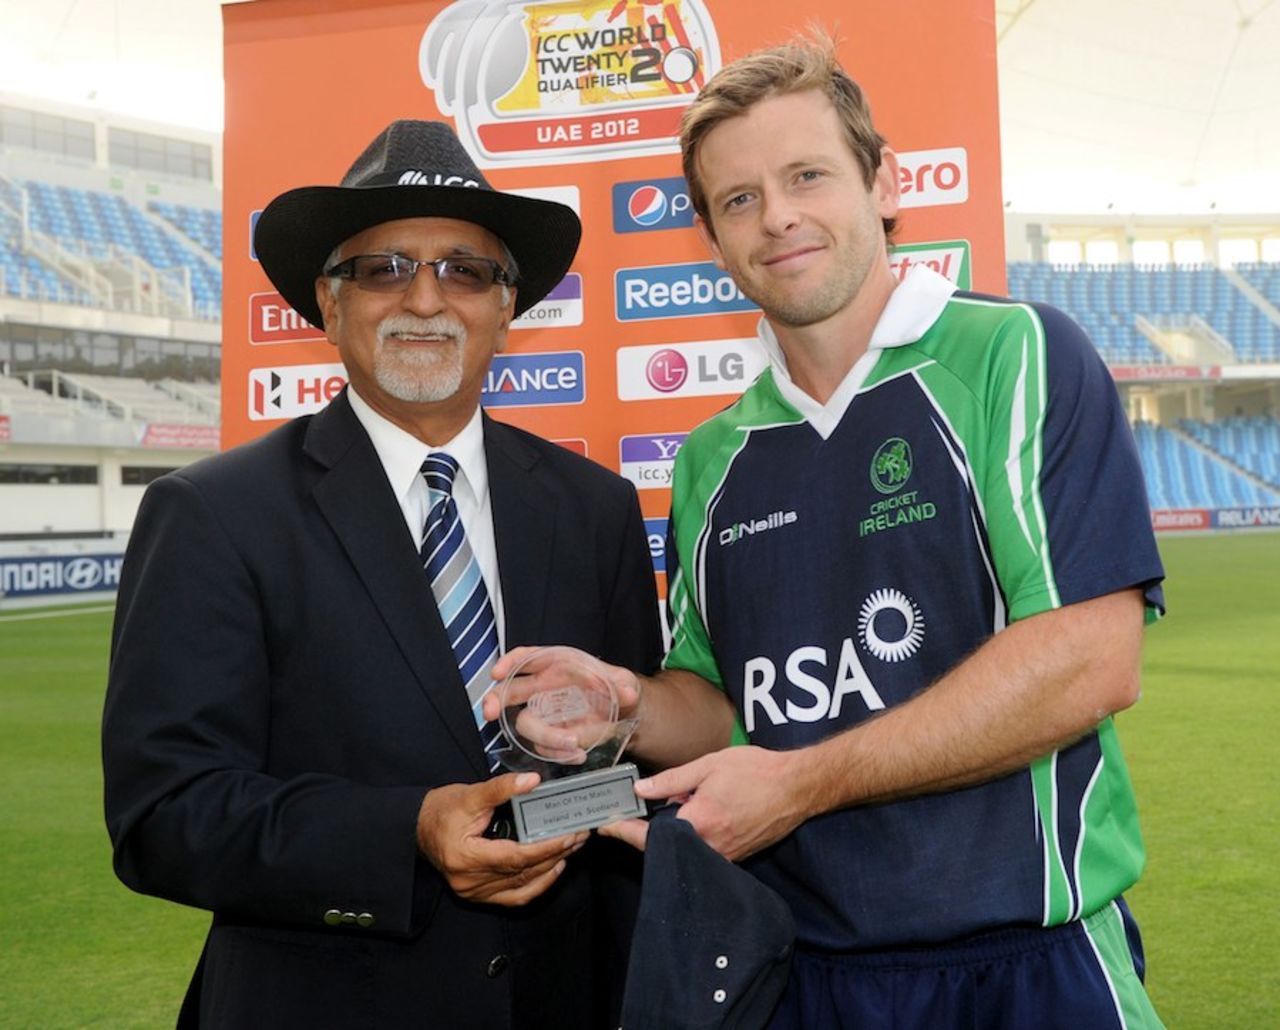 Ed Joyce was the Player of the Match for scoring 78, Ireland v Scotland, ICC World Twenty20 Qualifier, Dubai, March 18, 2012